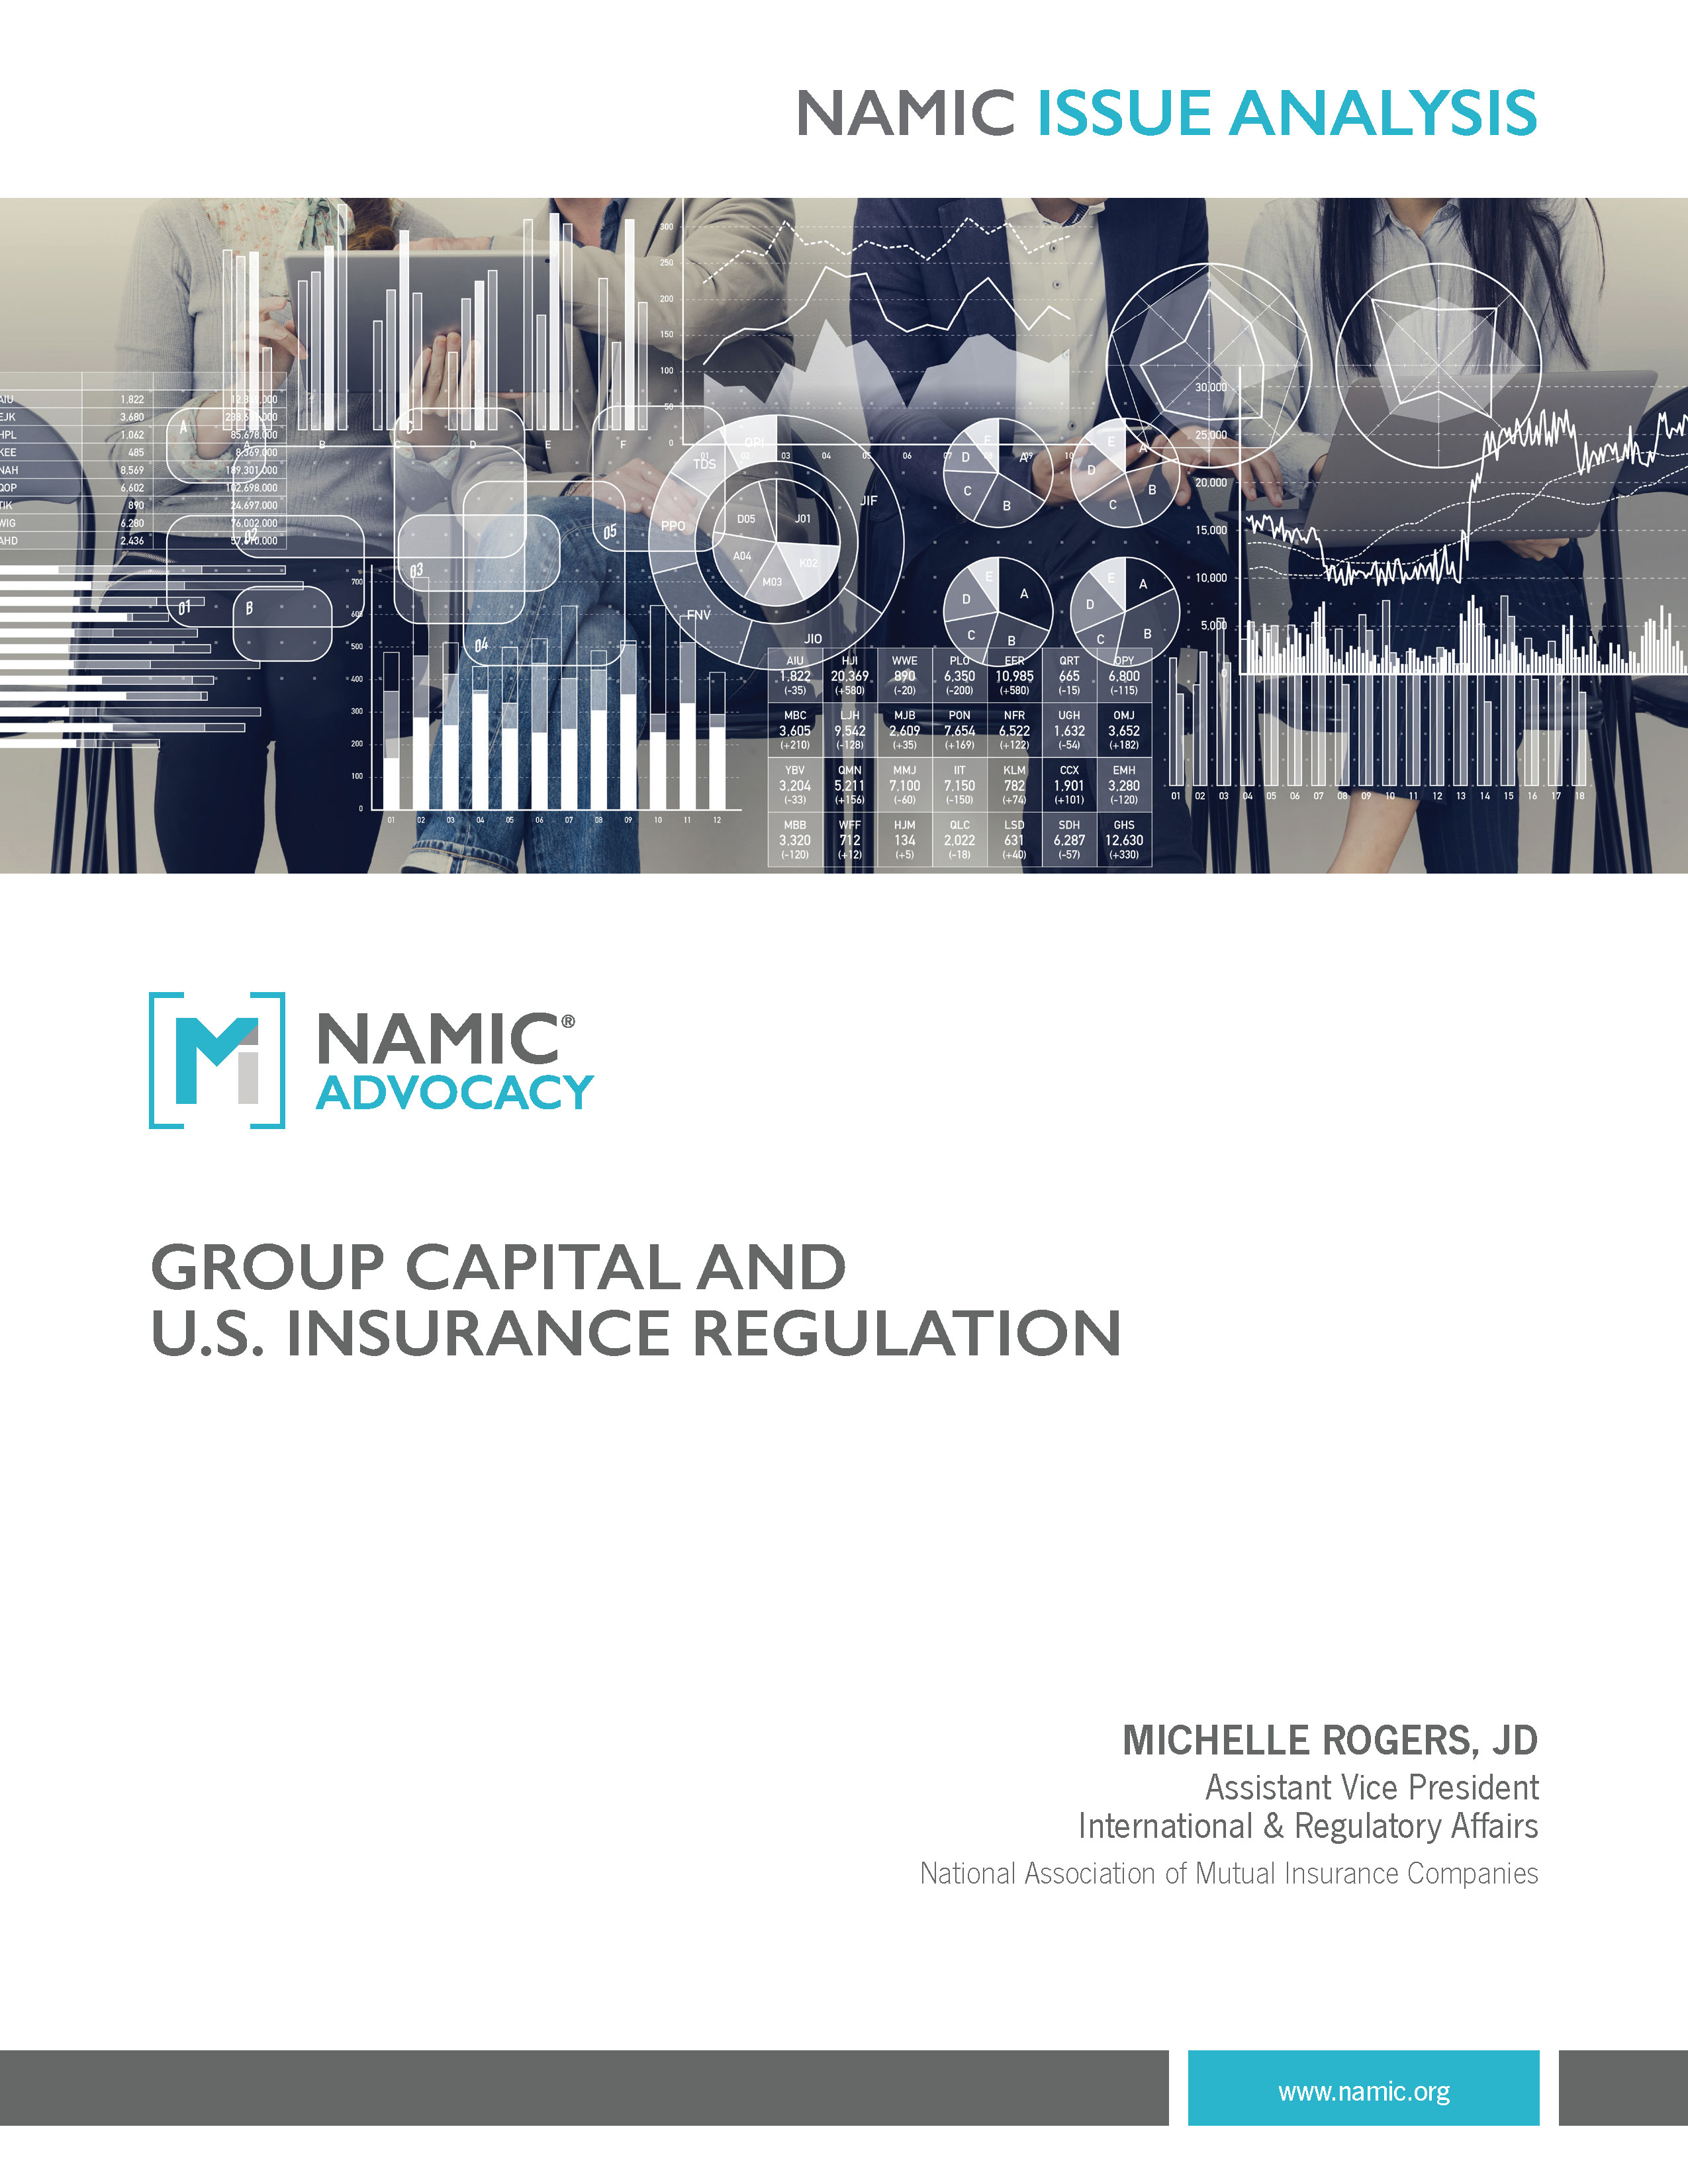 Group Capital and U.S. Insurance Regulation PDF